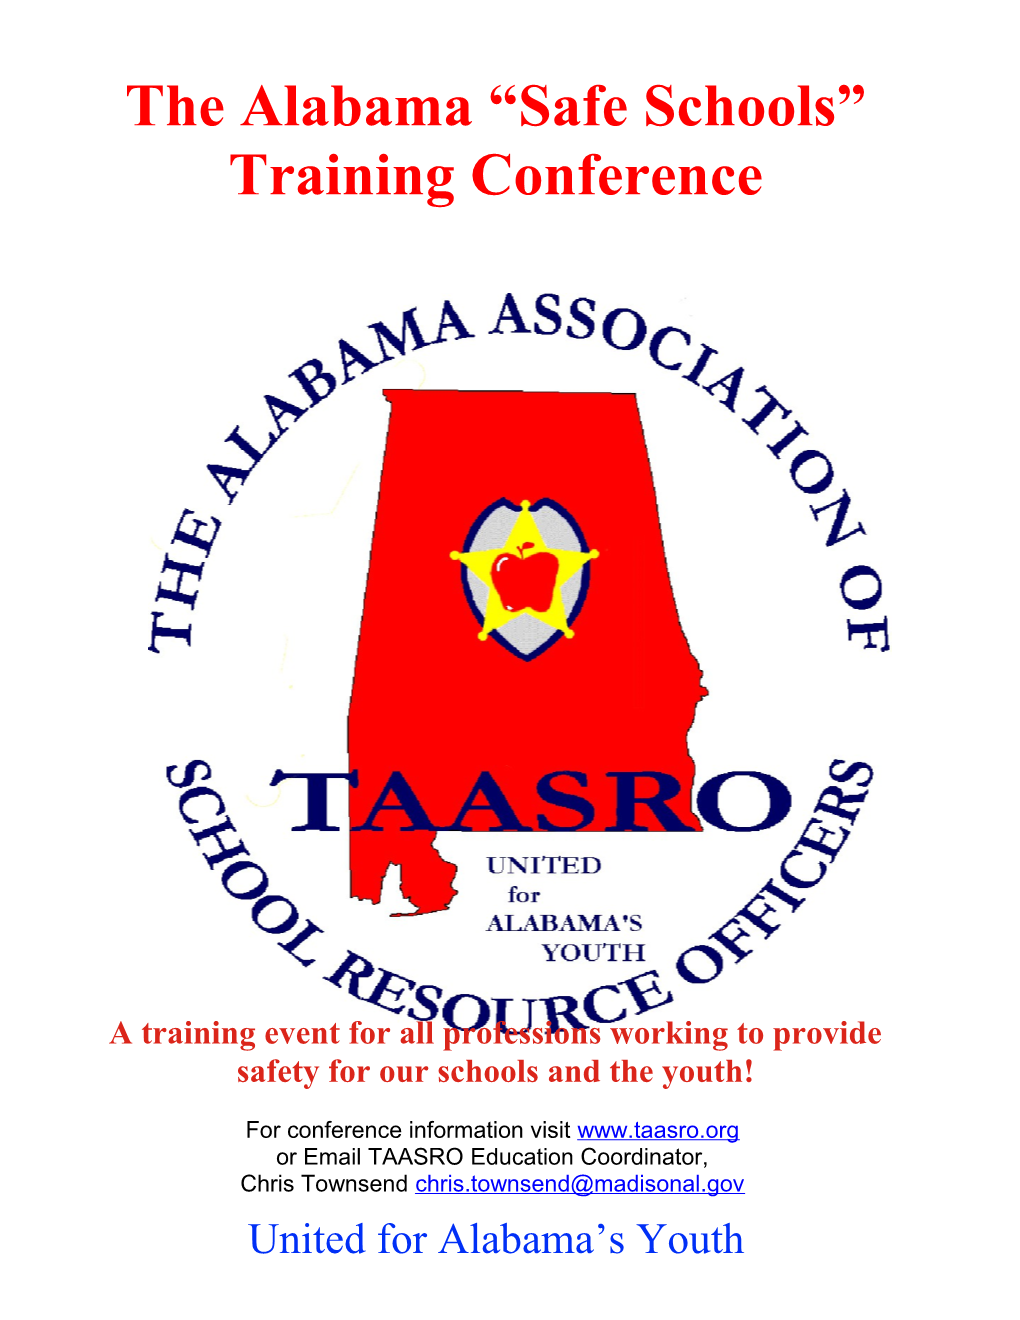 The Alabama Safe Schools Training Conference